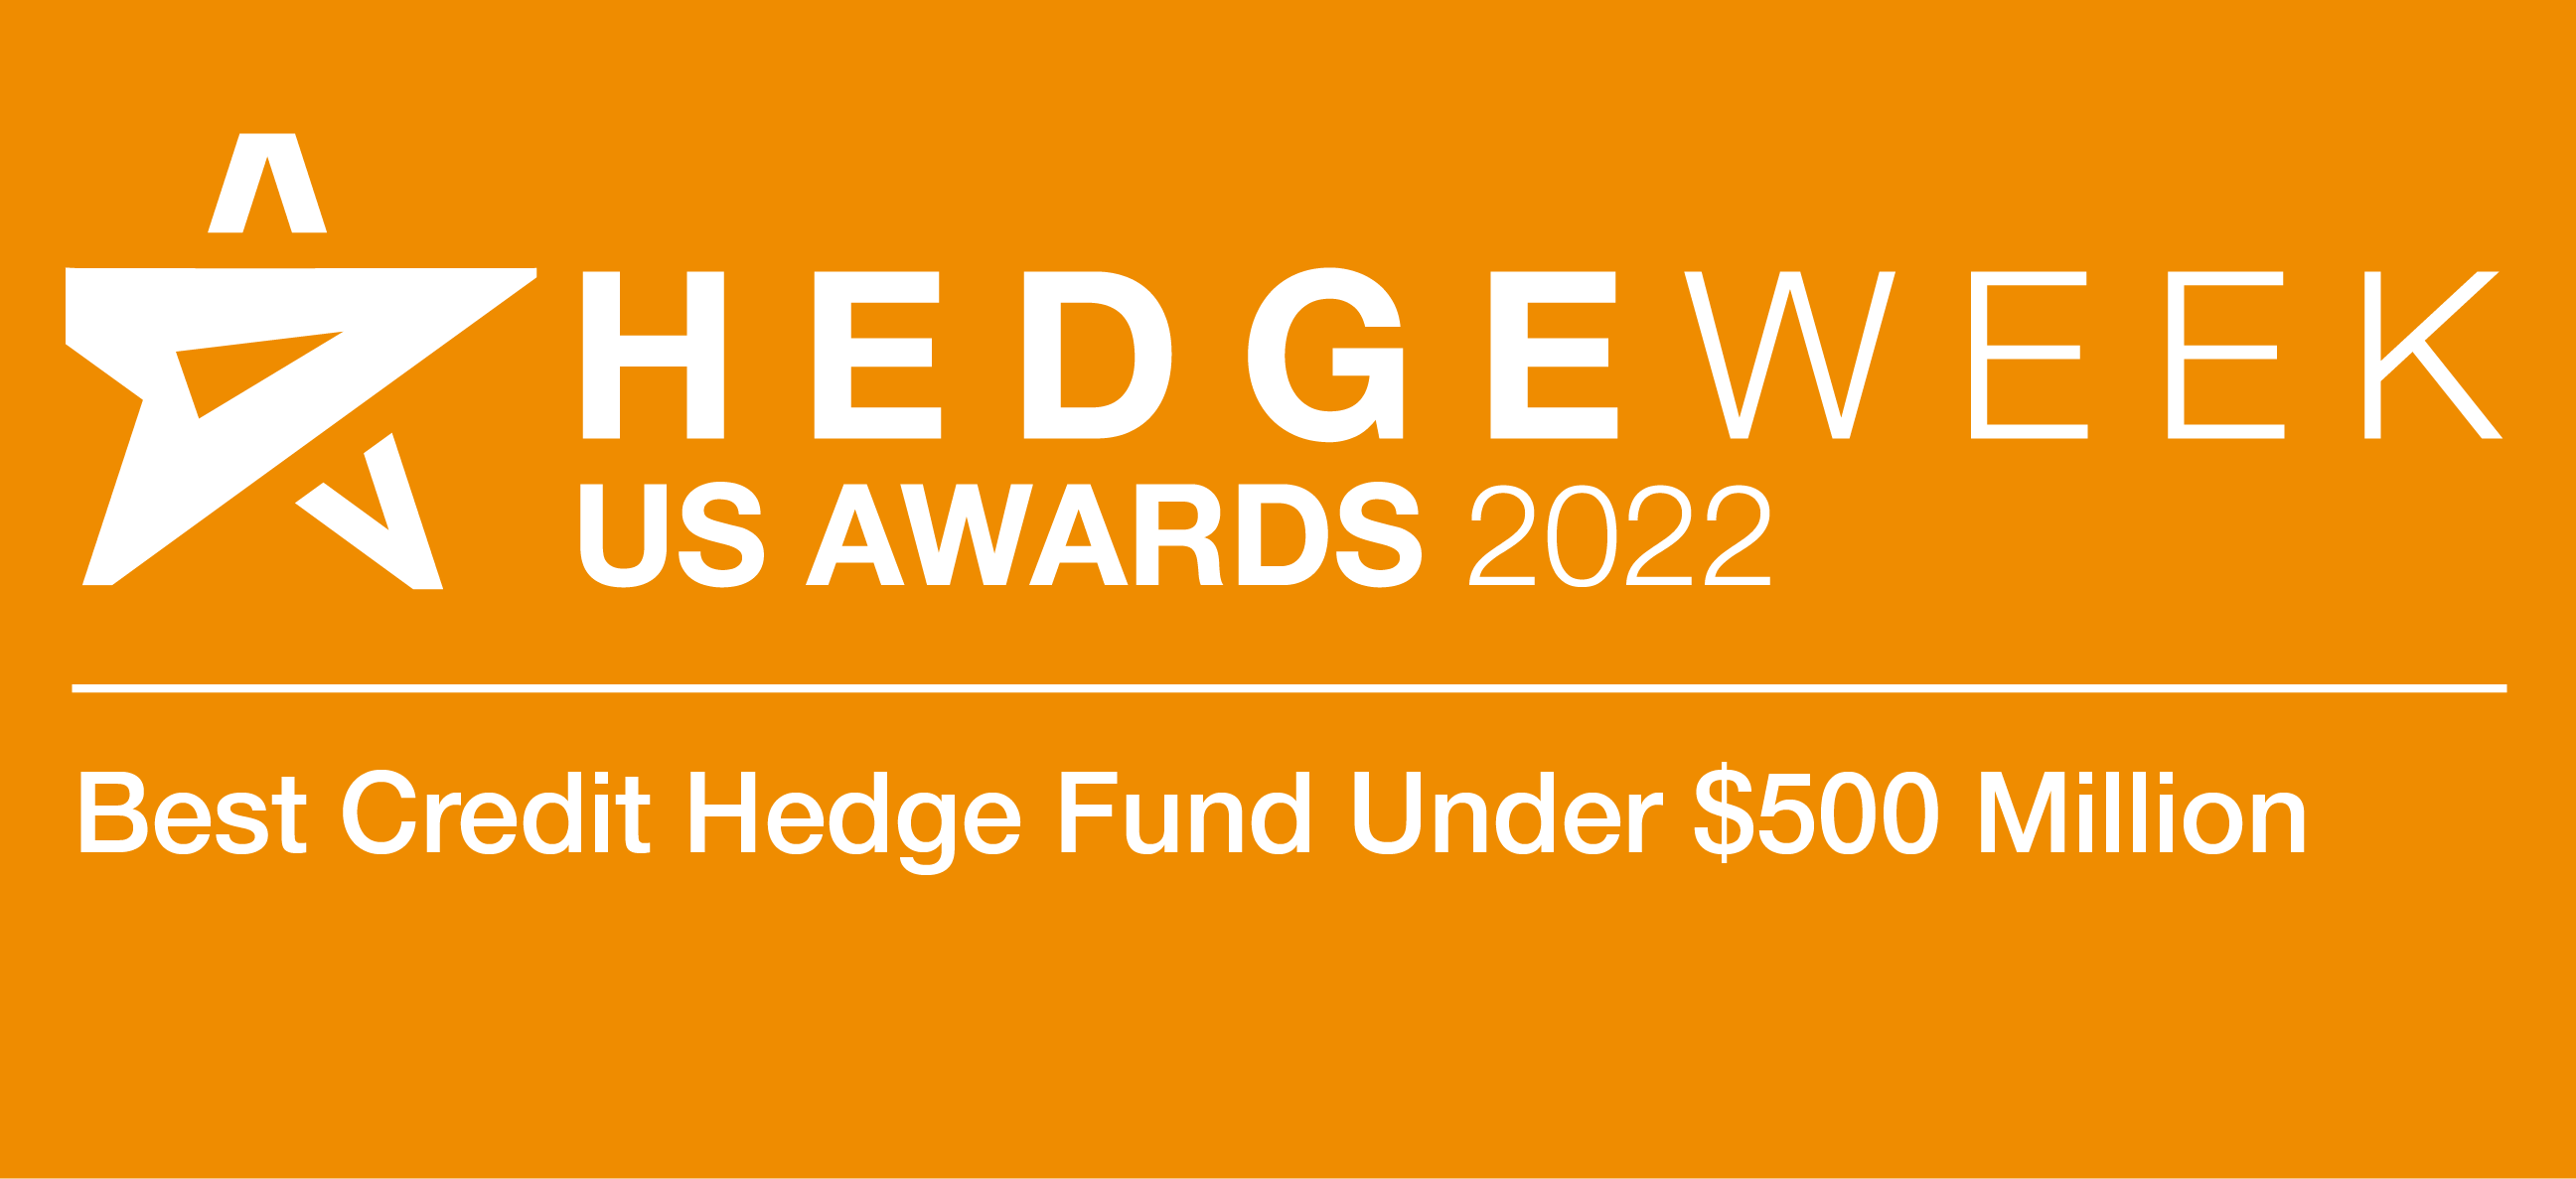 Hedgeweek US Awards 2022 - Best Credit Hedge Fund Under $500 Million